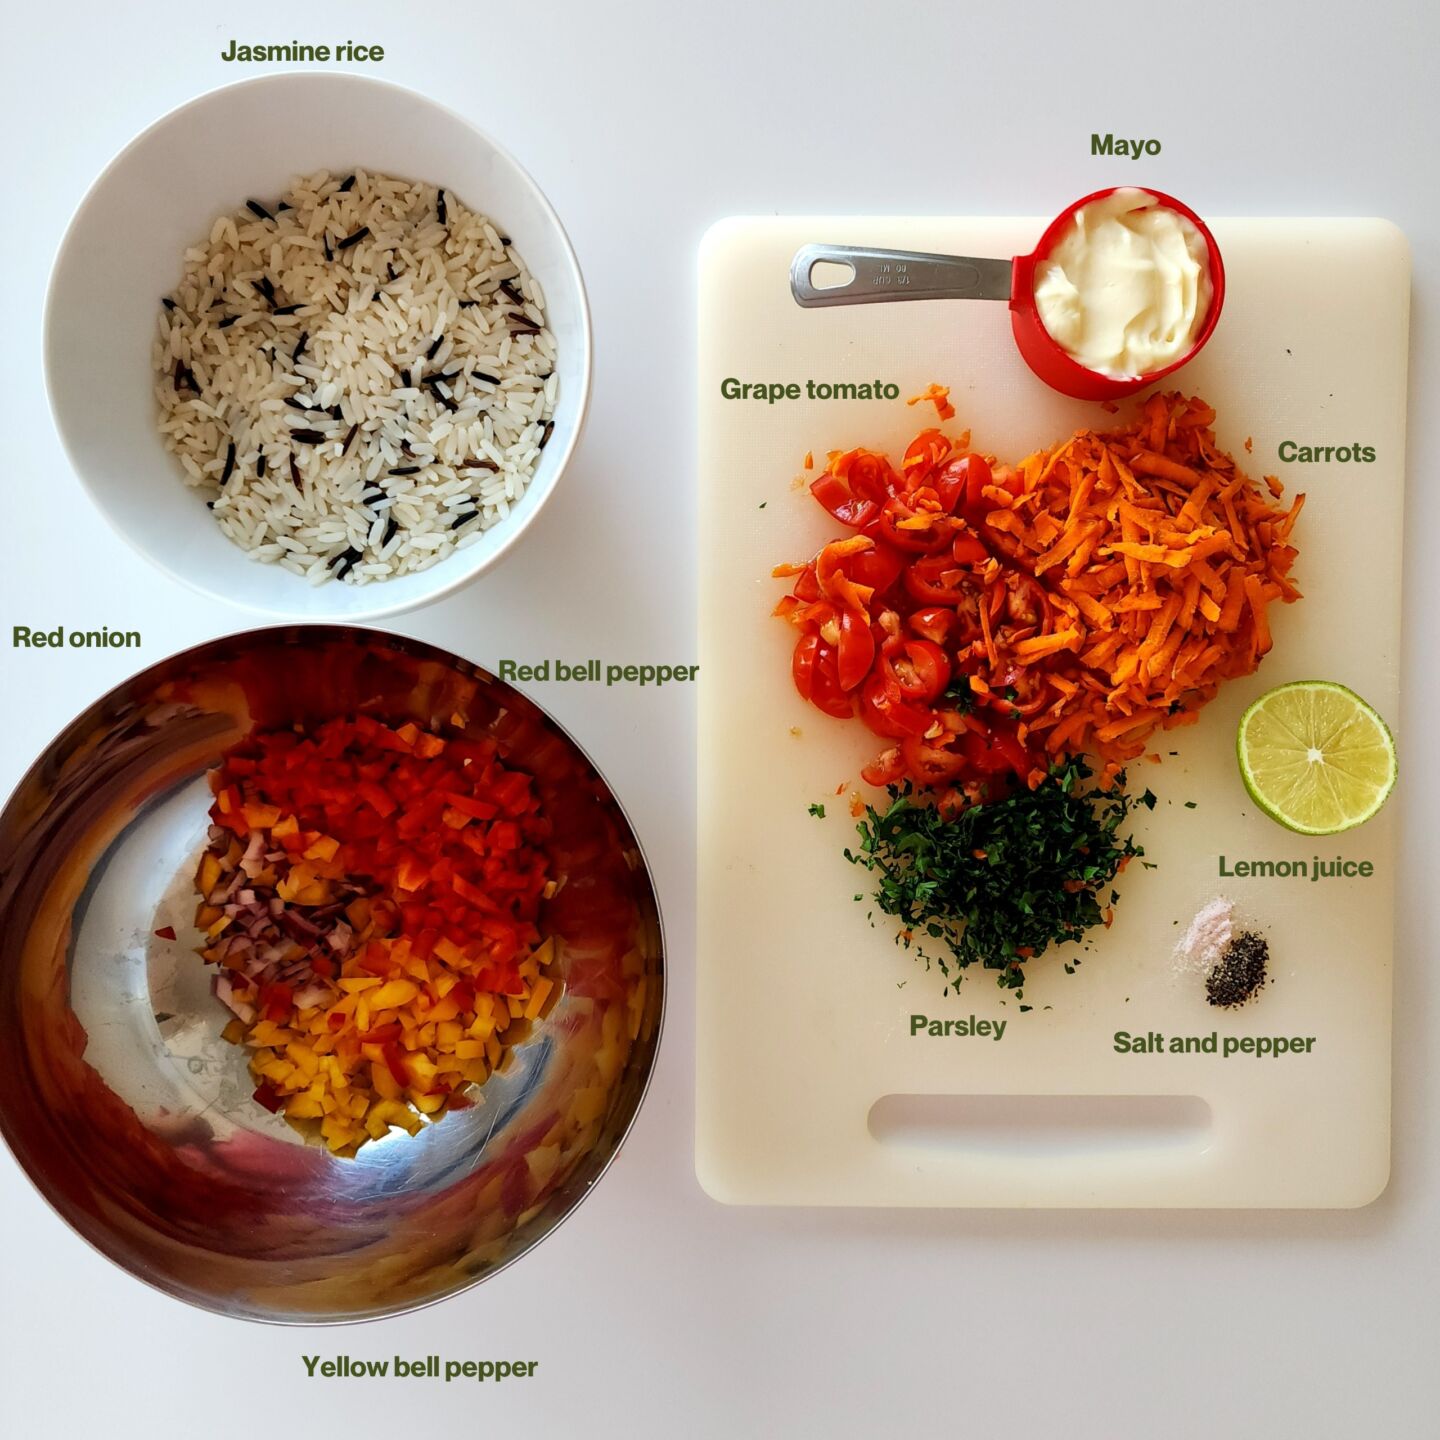 rice salad - ingredients